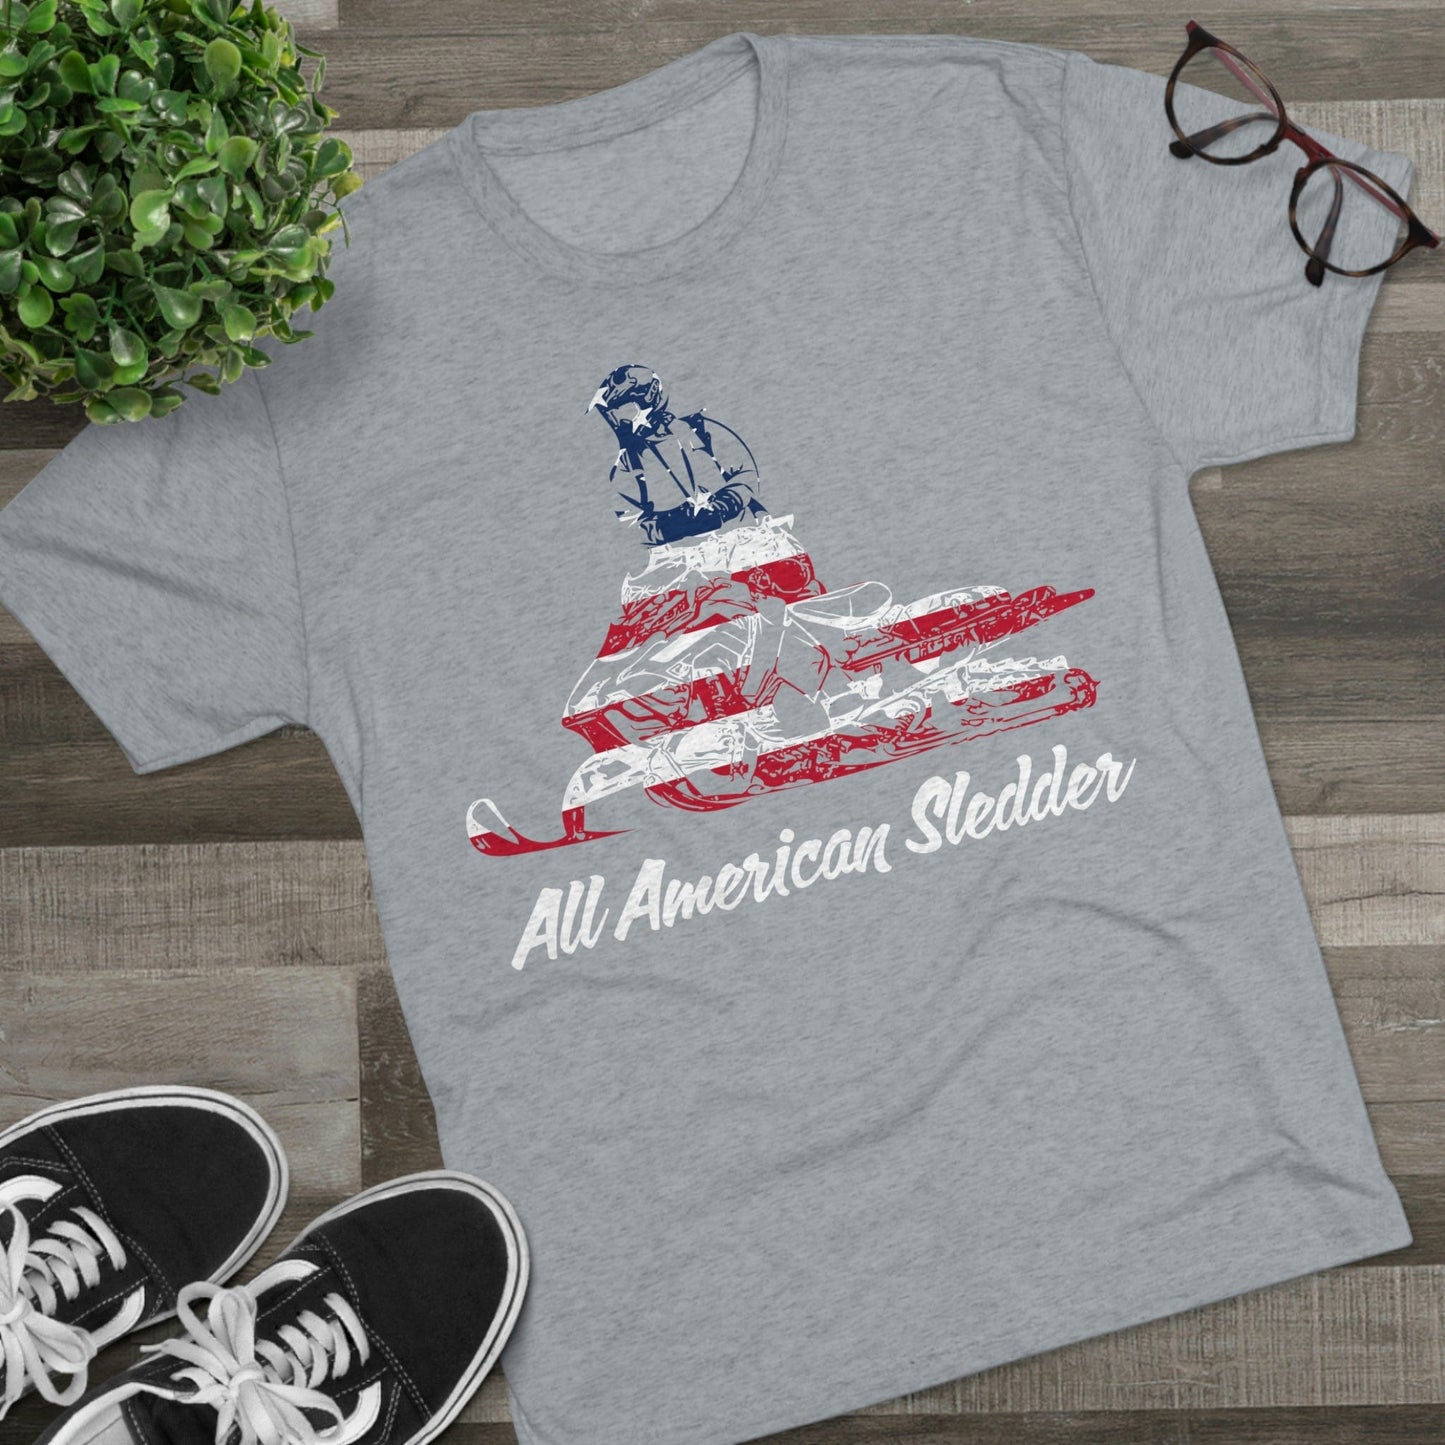 "All American Sledder"  Tee